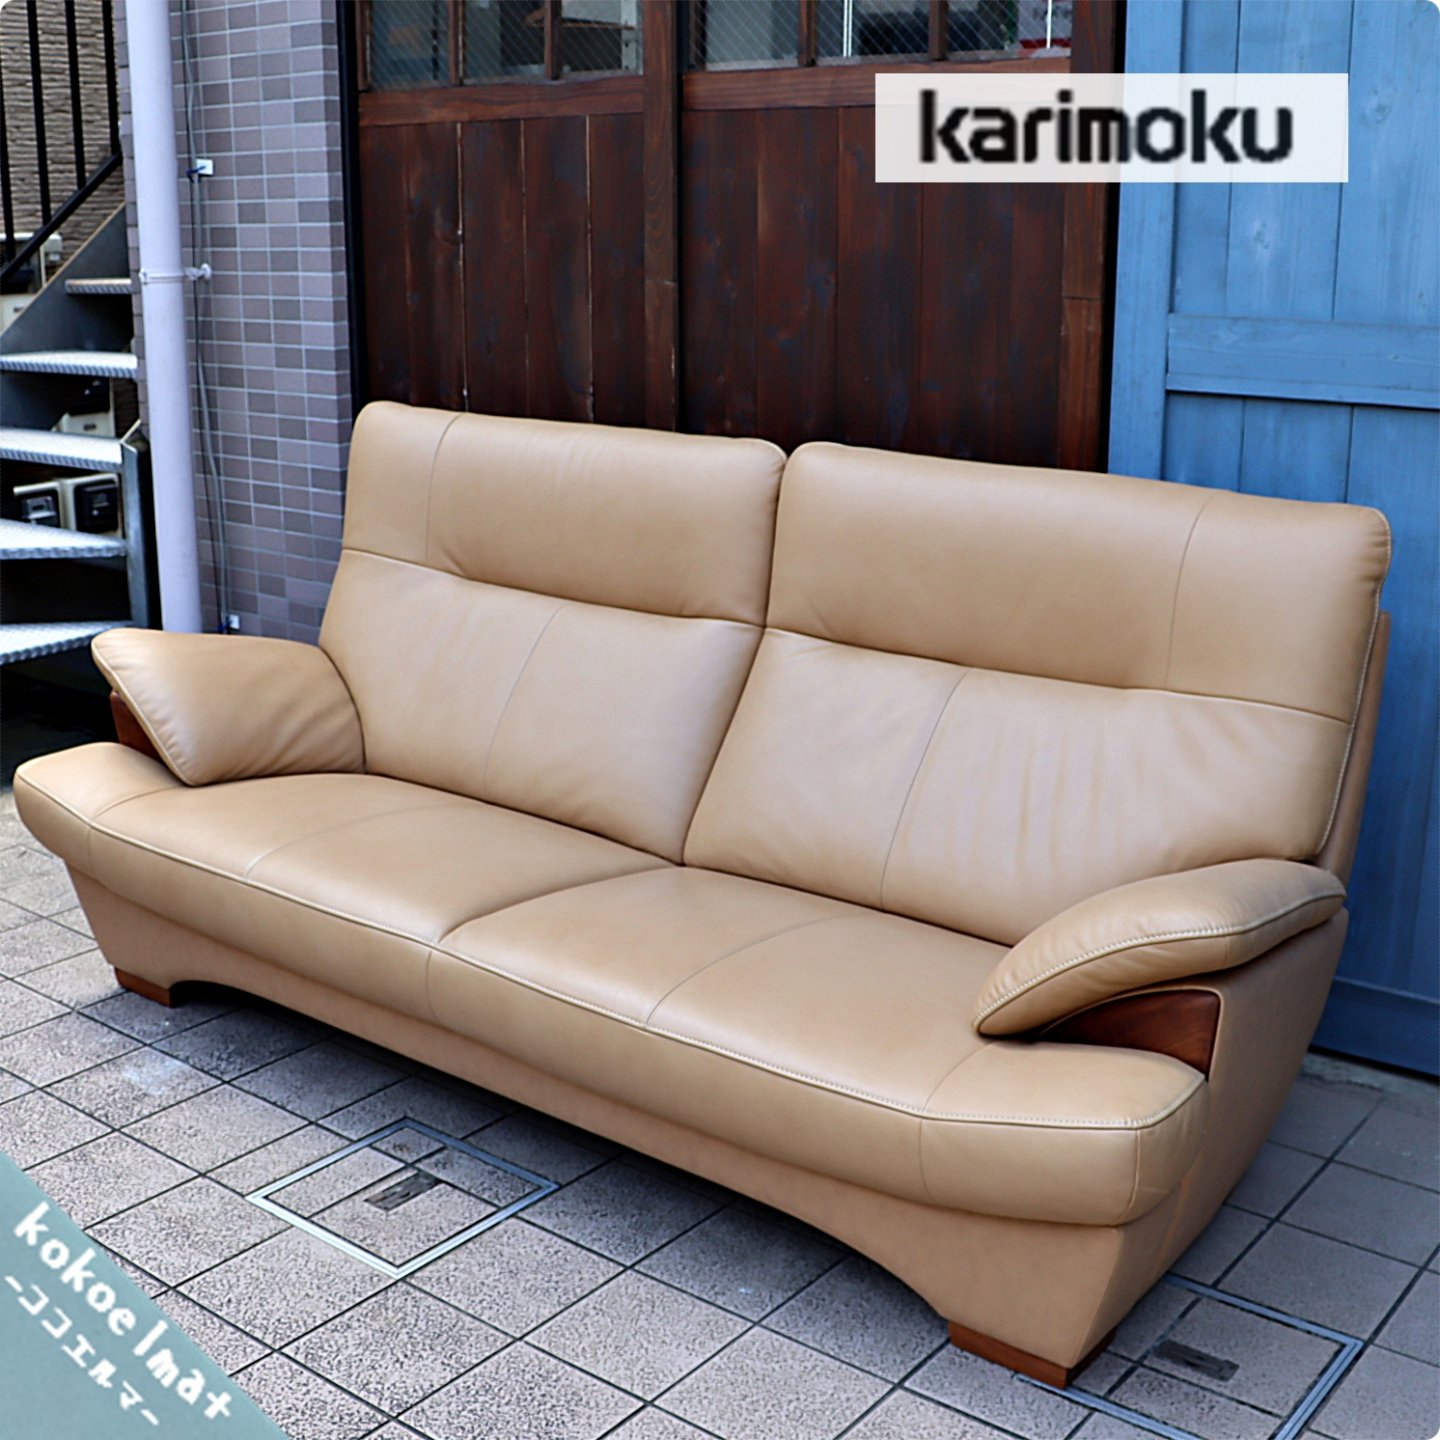 karimoku(カリモク家具)のブルックス 本革 3人掛けソファーです